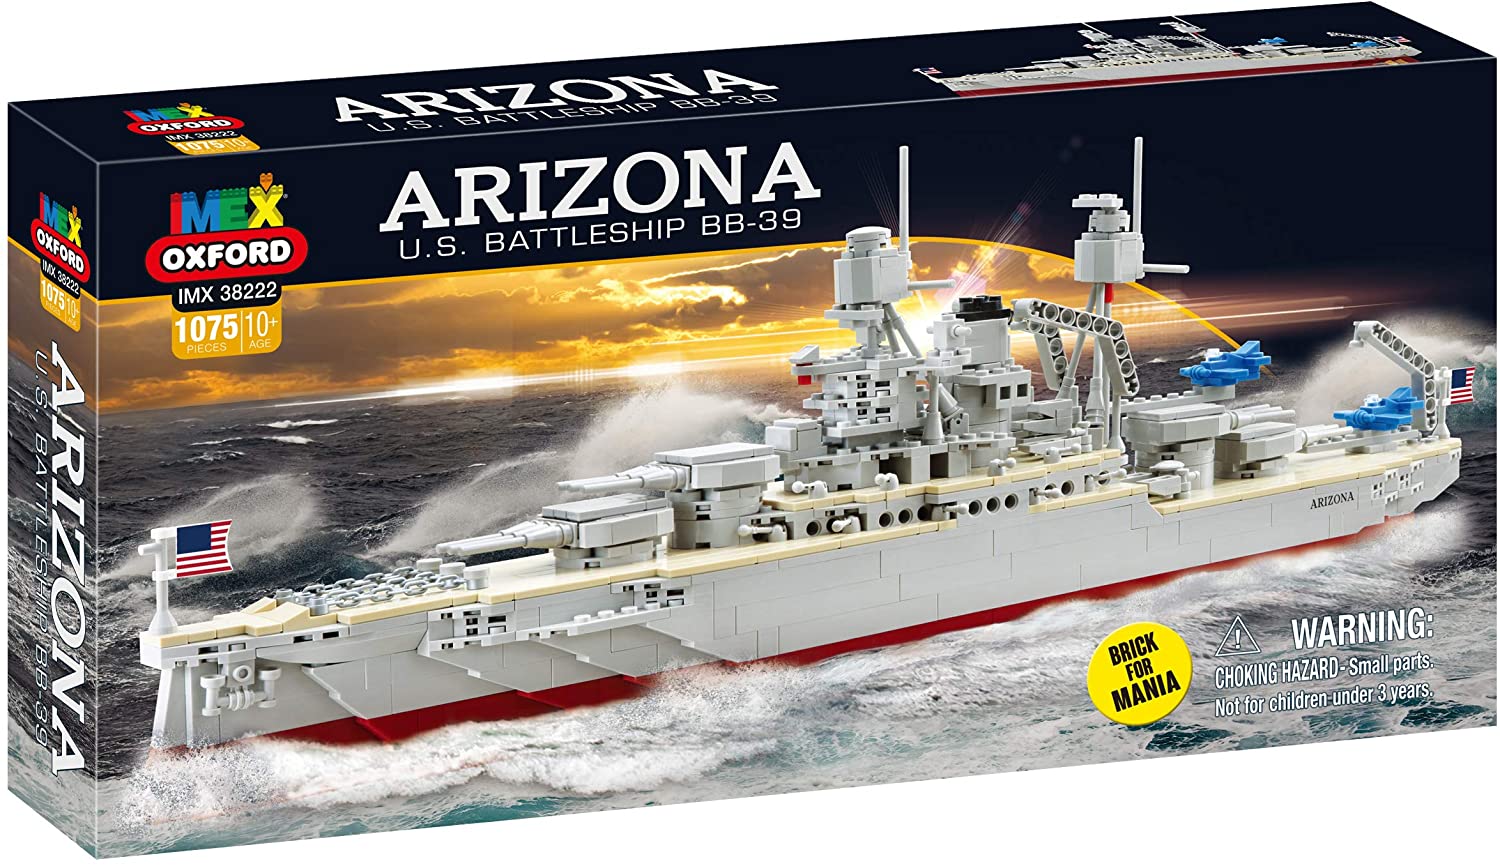 uss arizona ship